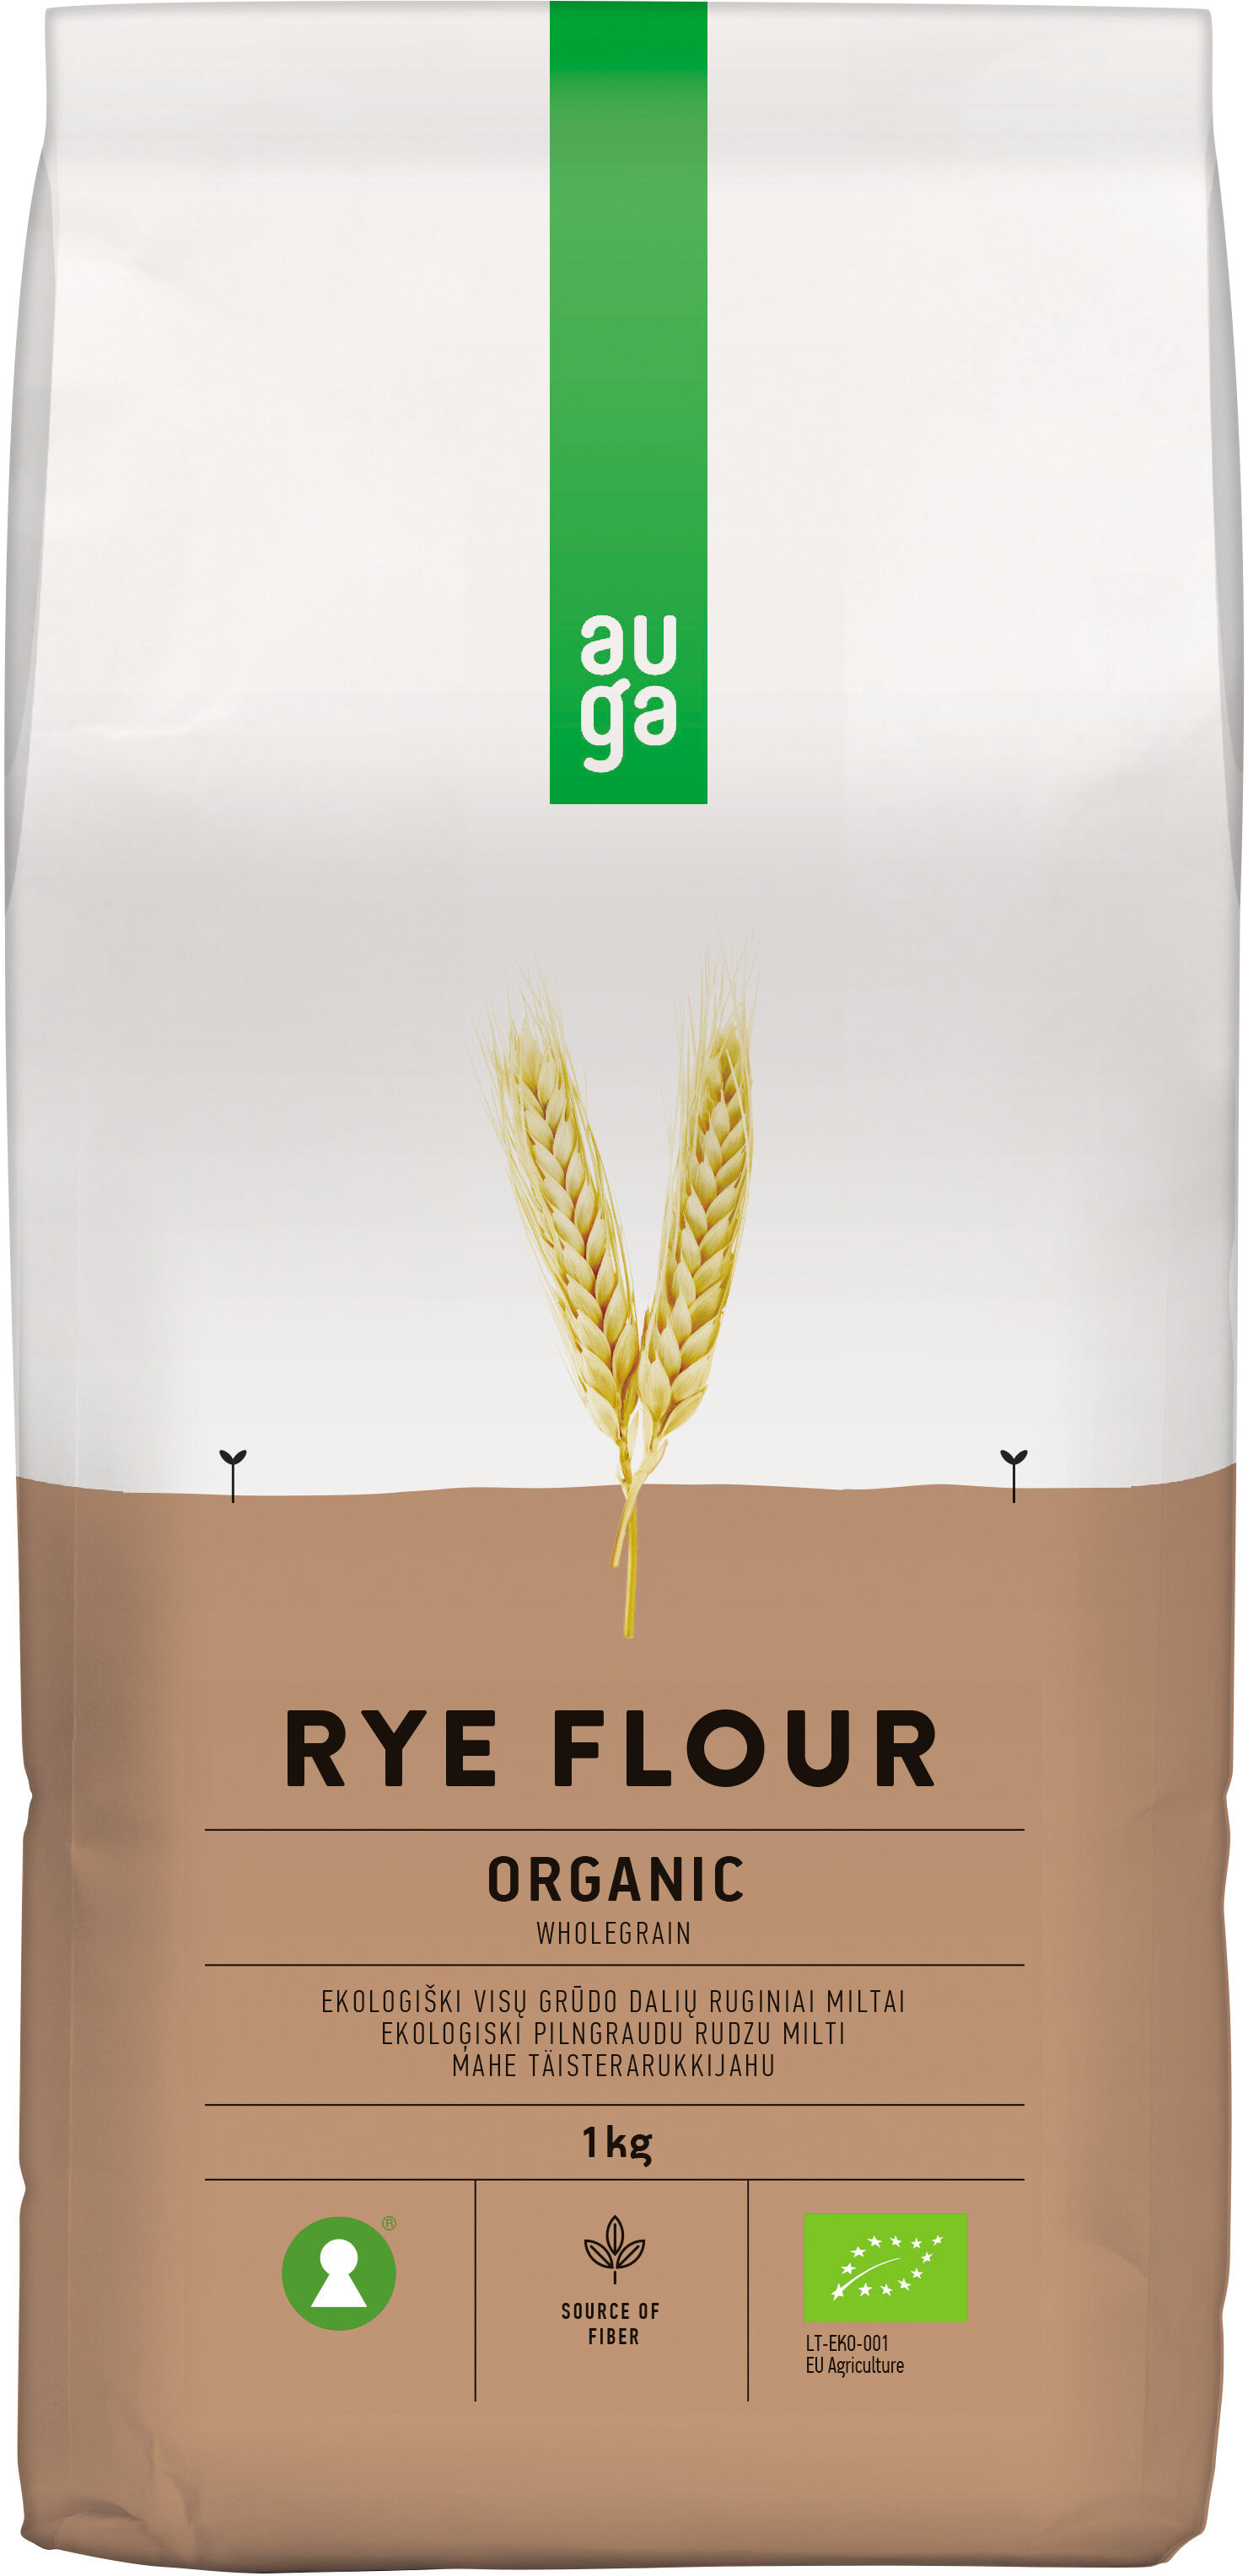 Rye Flour - Product - en